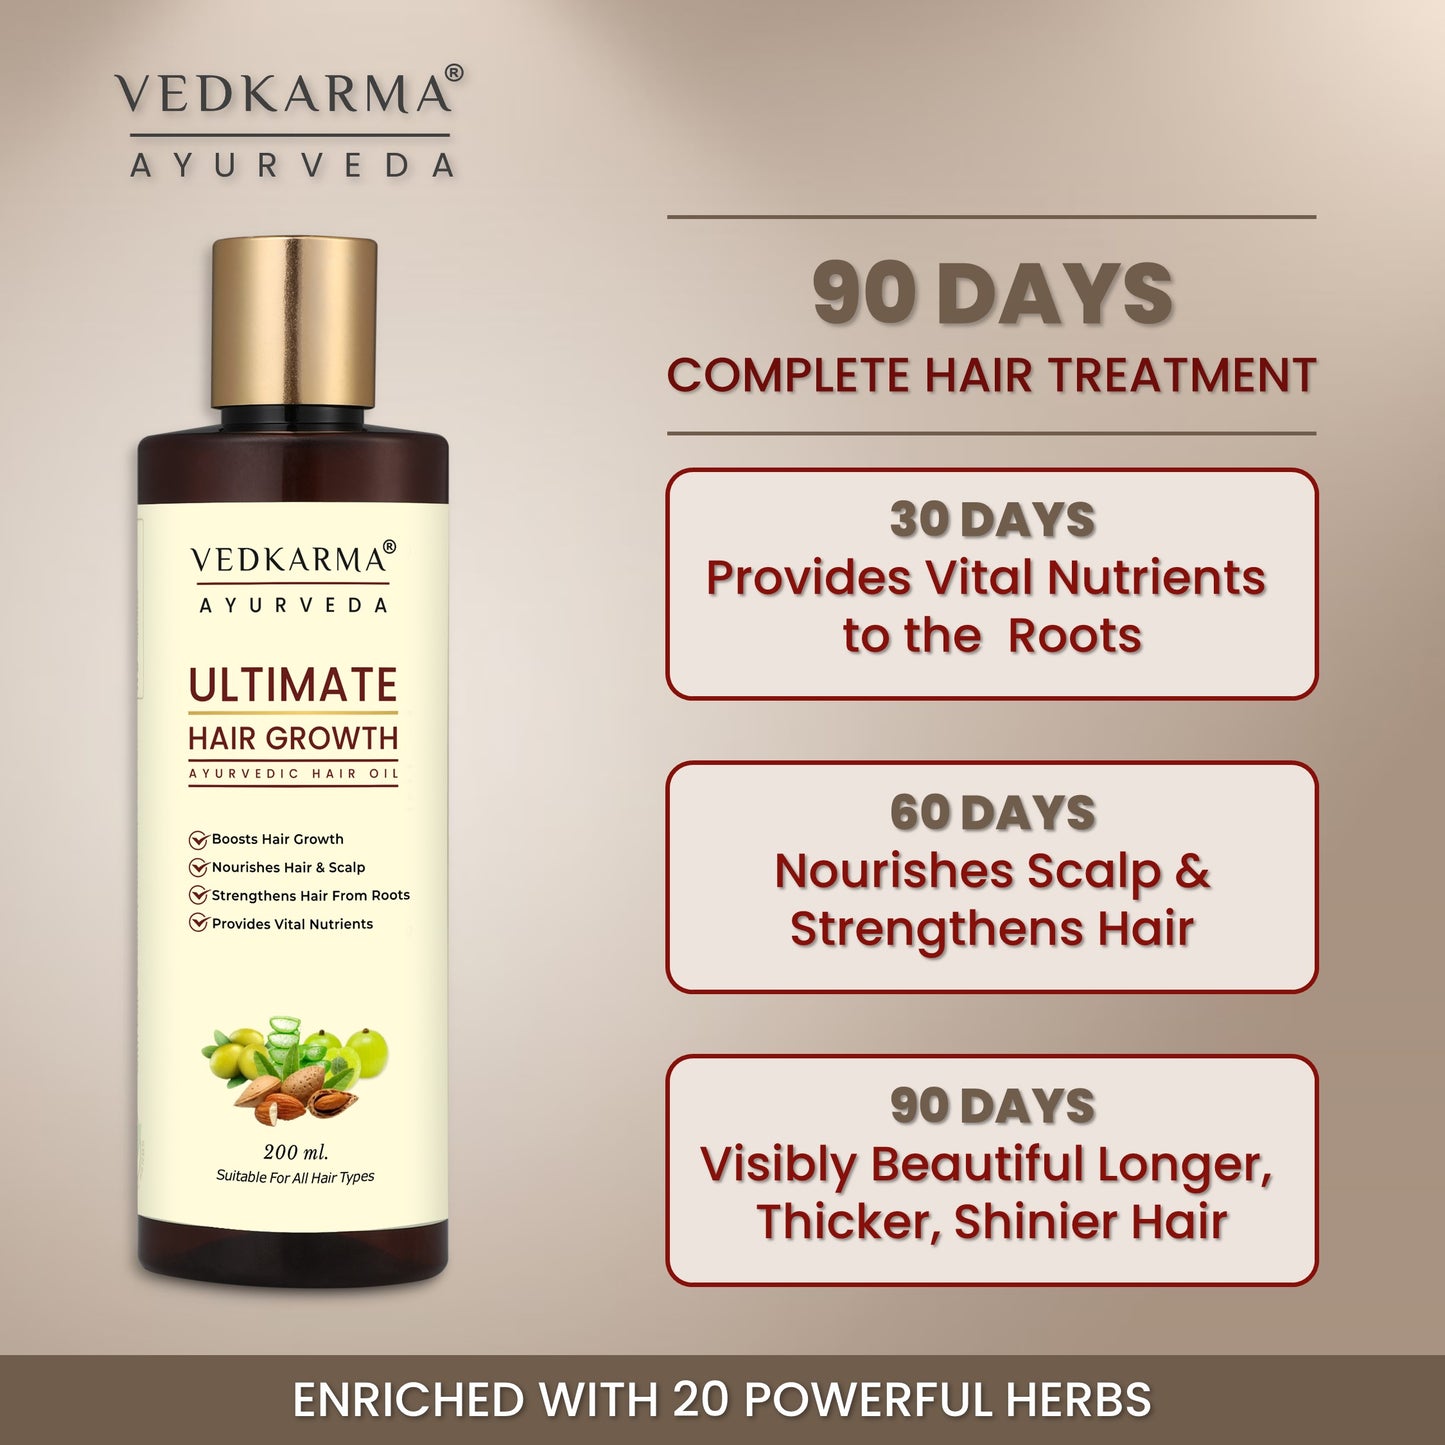 Vedkarma Ayurveda Ultimate Hair Growth | Ayurvedic Hair Oil | Boosts Hair Growth | With 20 Powerful Herbs